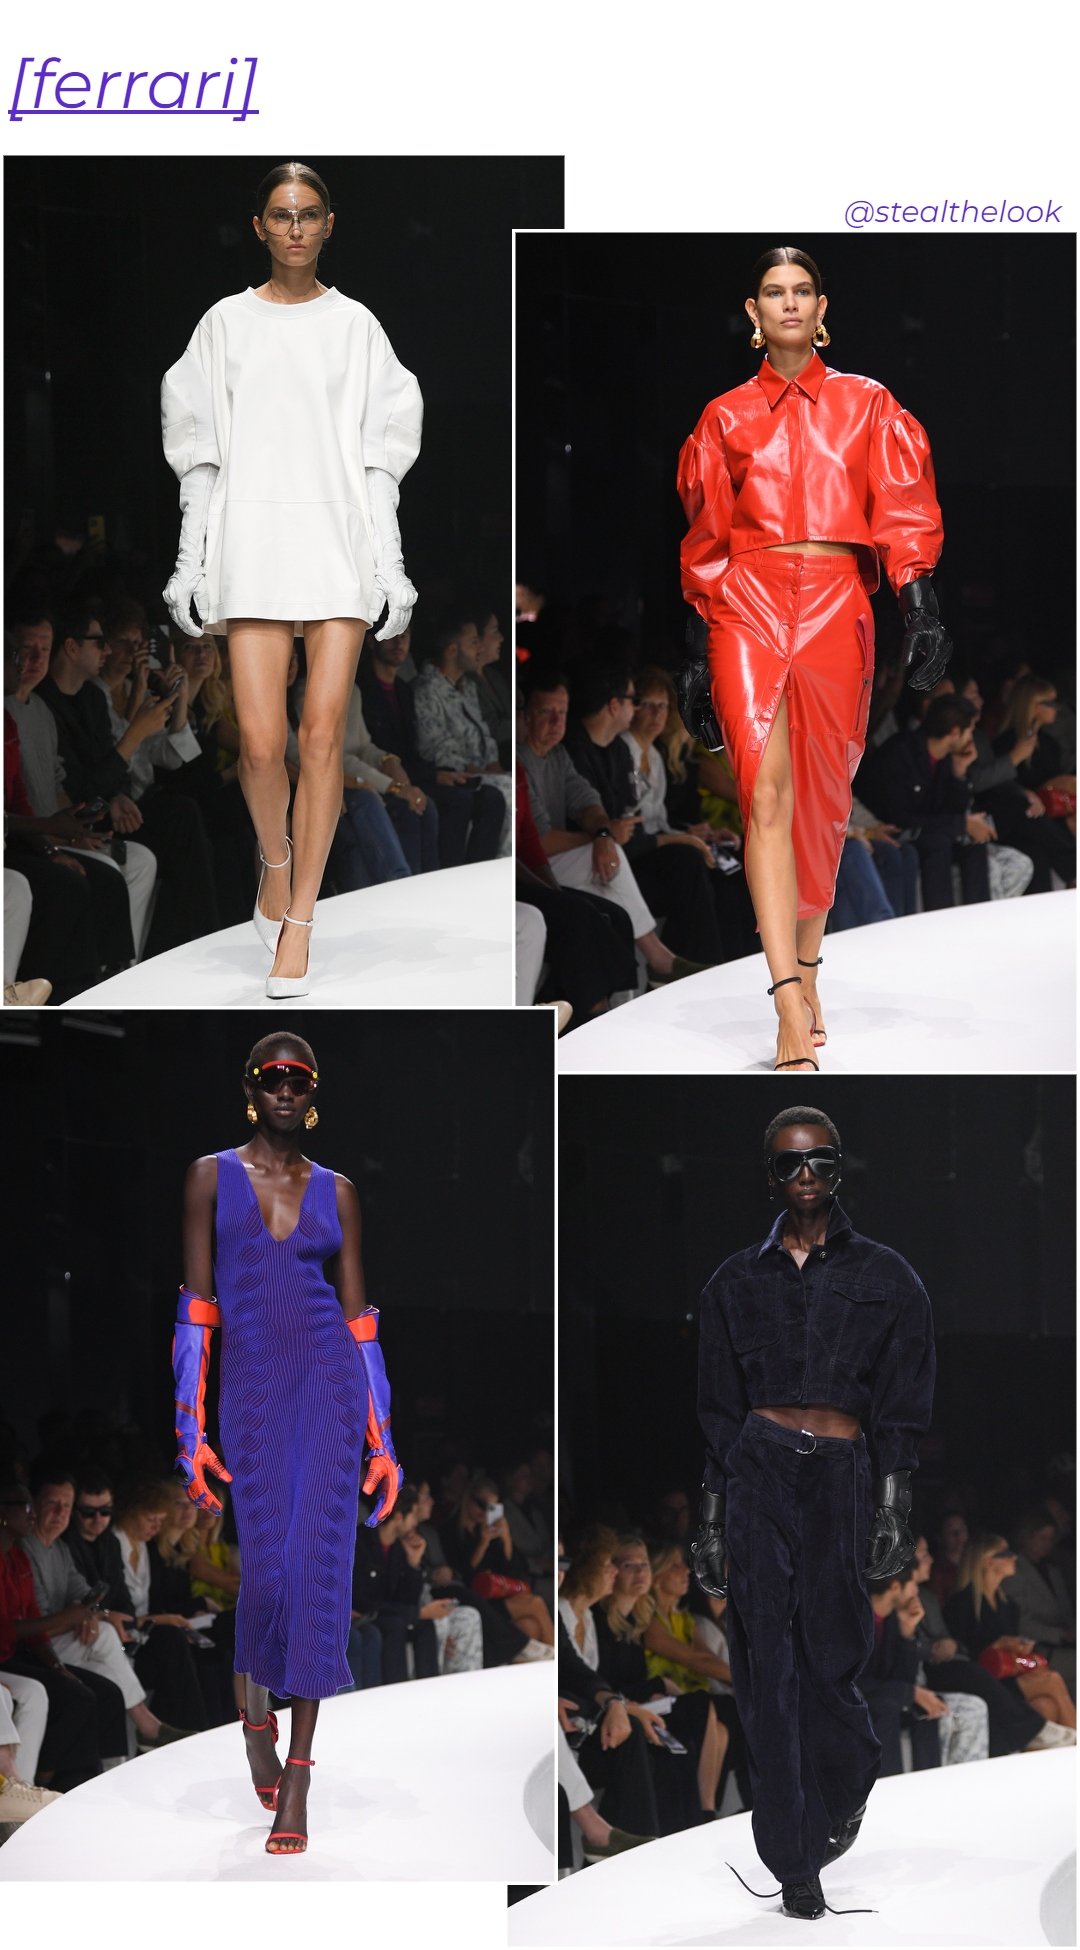 Ferrari - roupas diversas - Milano Fashion Week - primavera - colagem de imagens - https://stealthelook.com.br